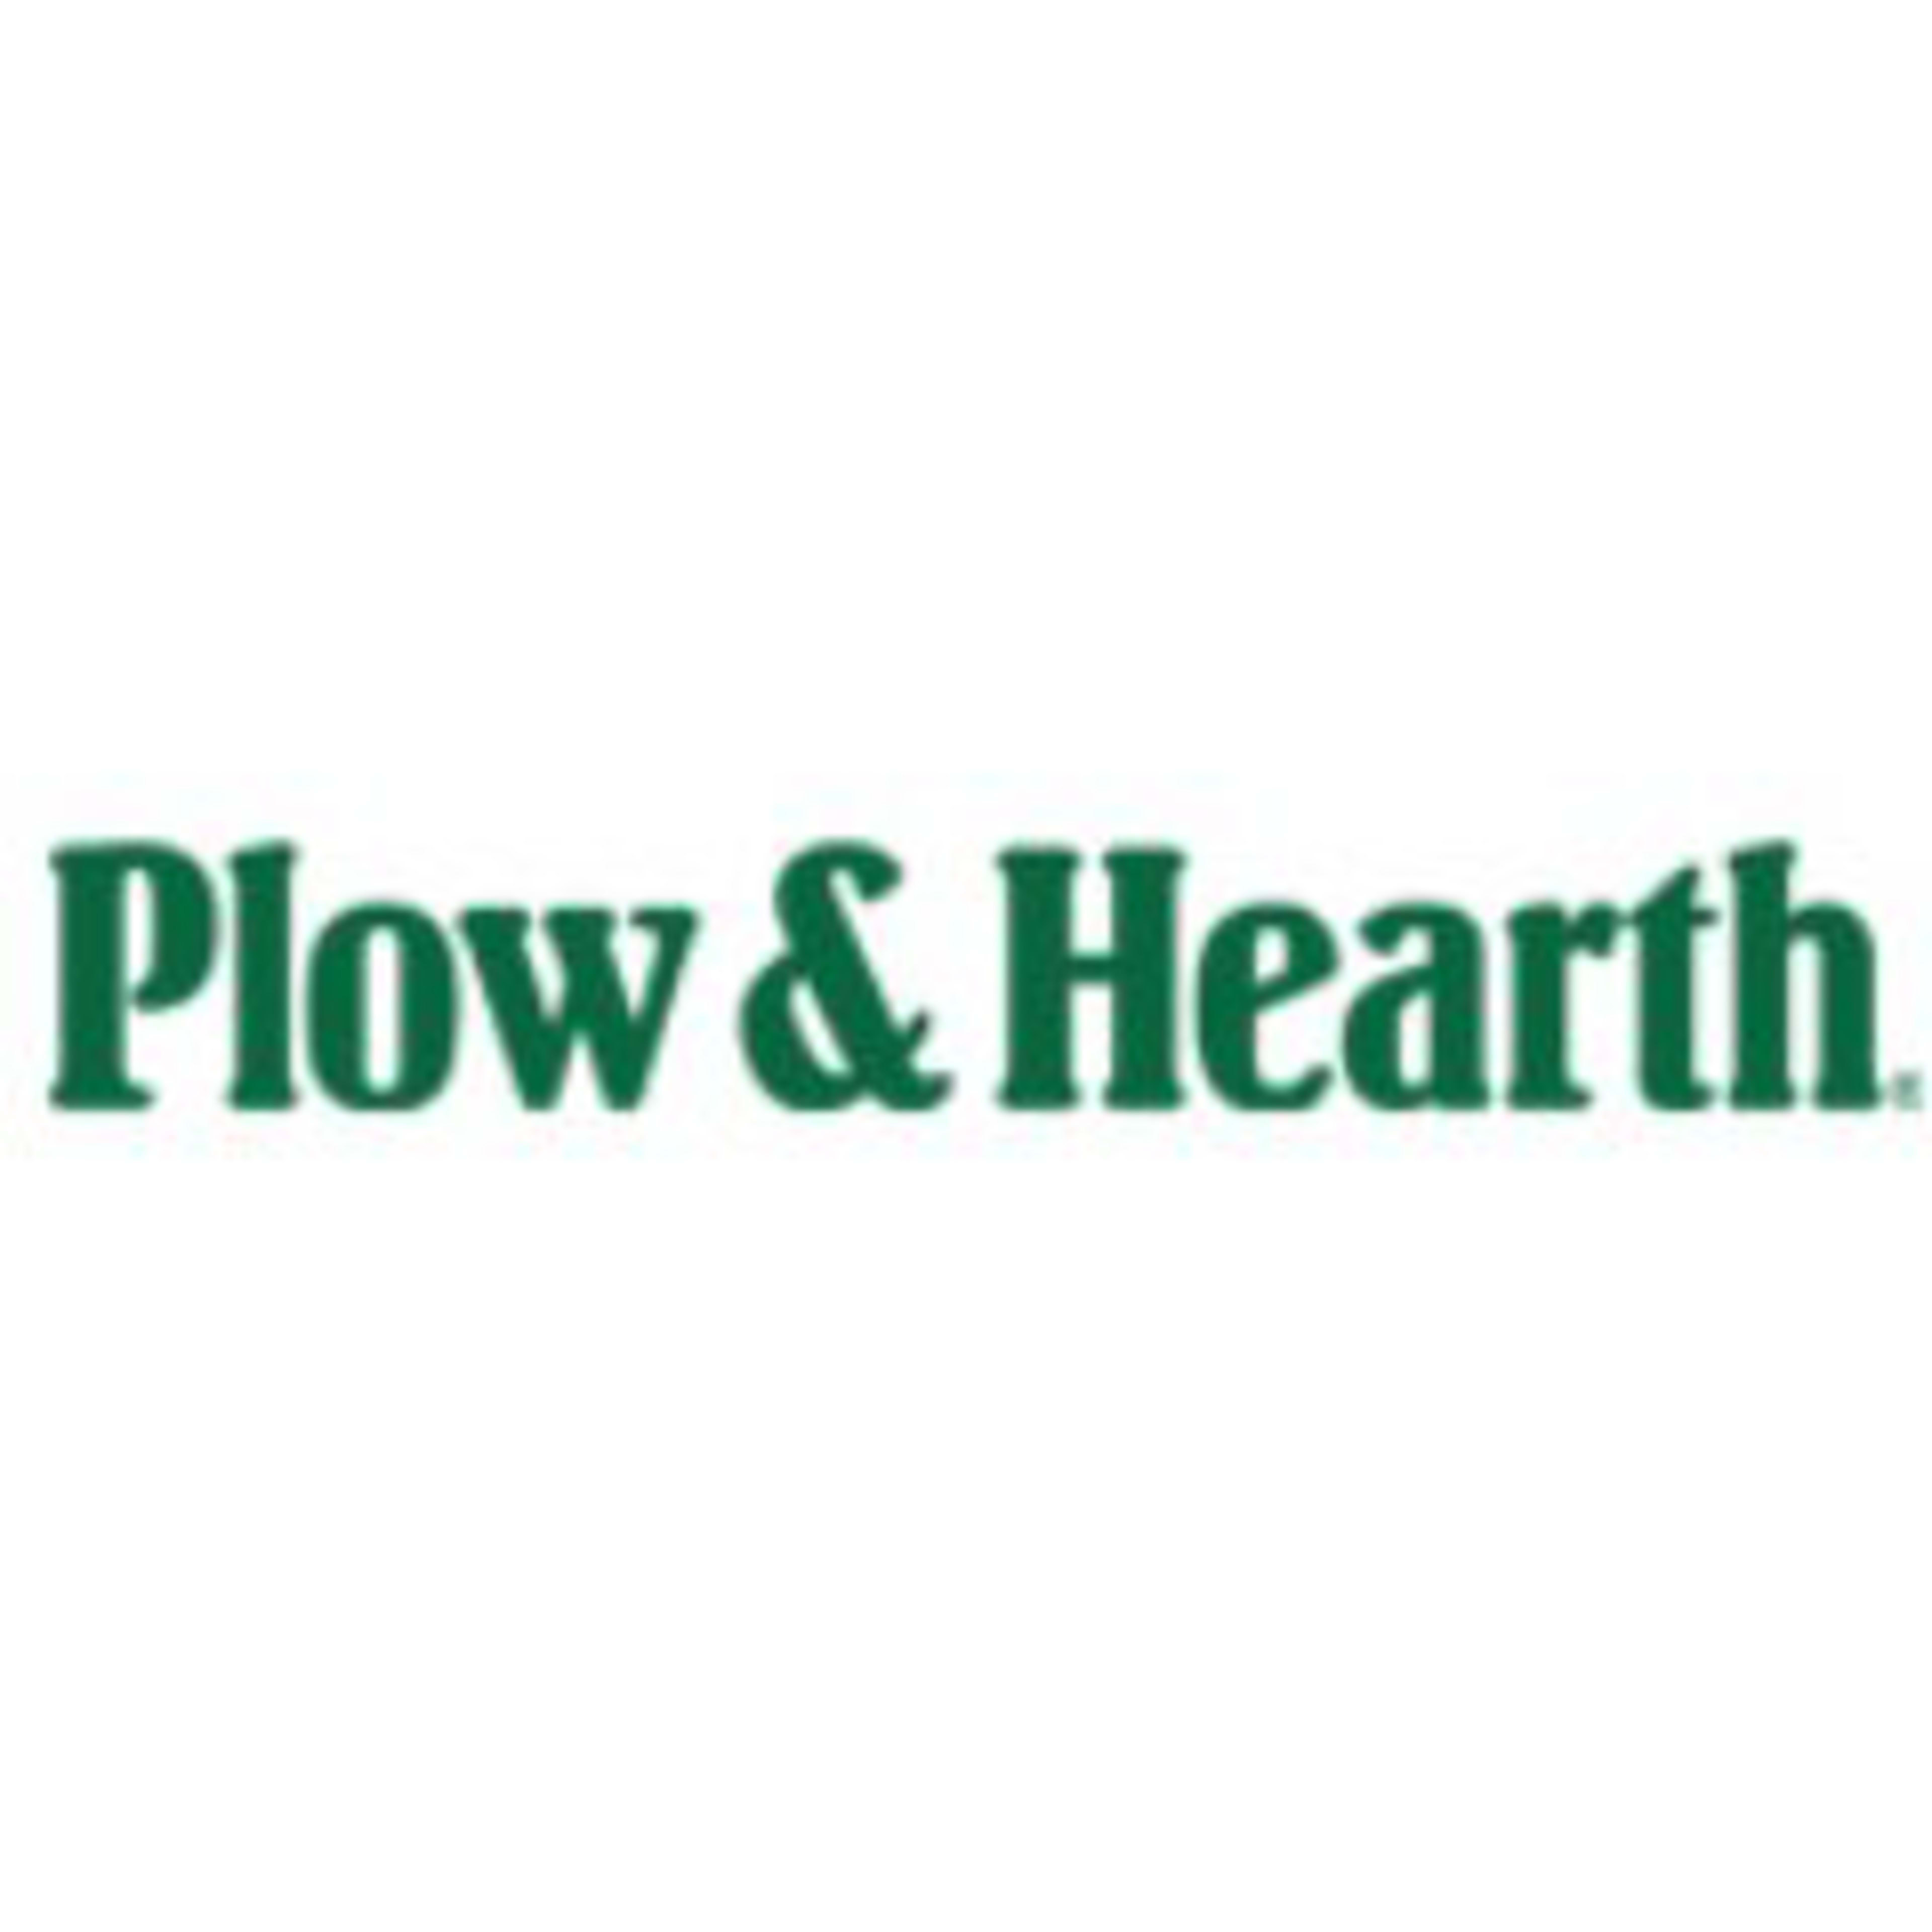 Plow & Hearth Code